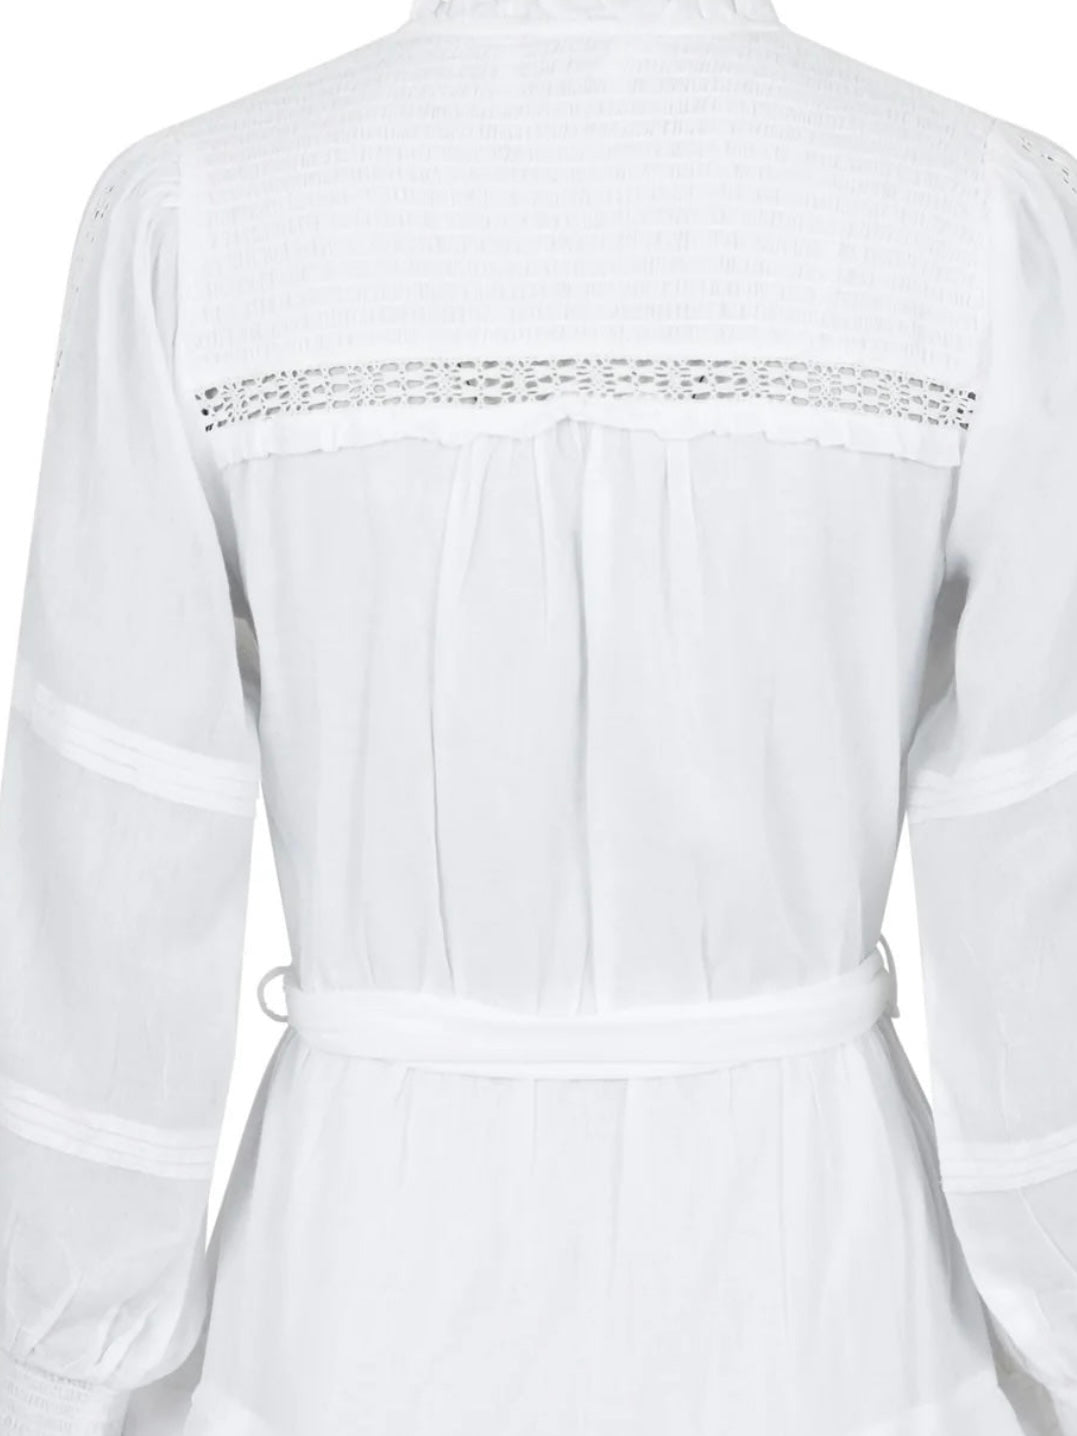 
                  
                    NEO NOIR ADA S VOILE DRESS WHITE
                  
                